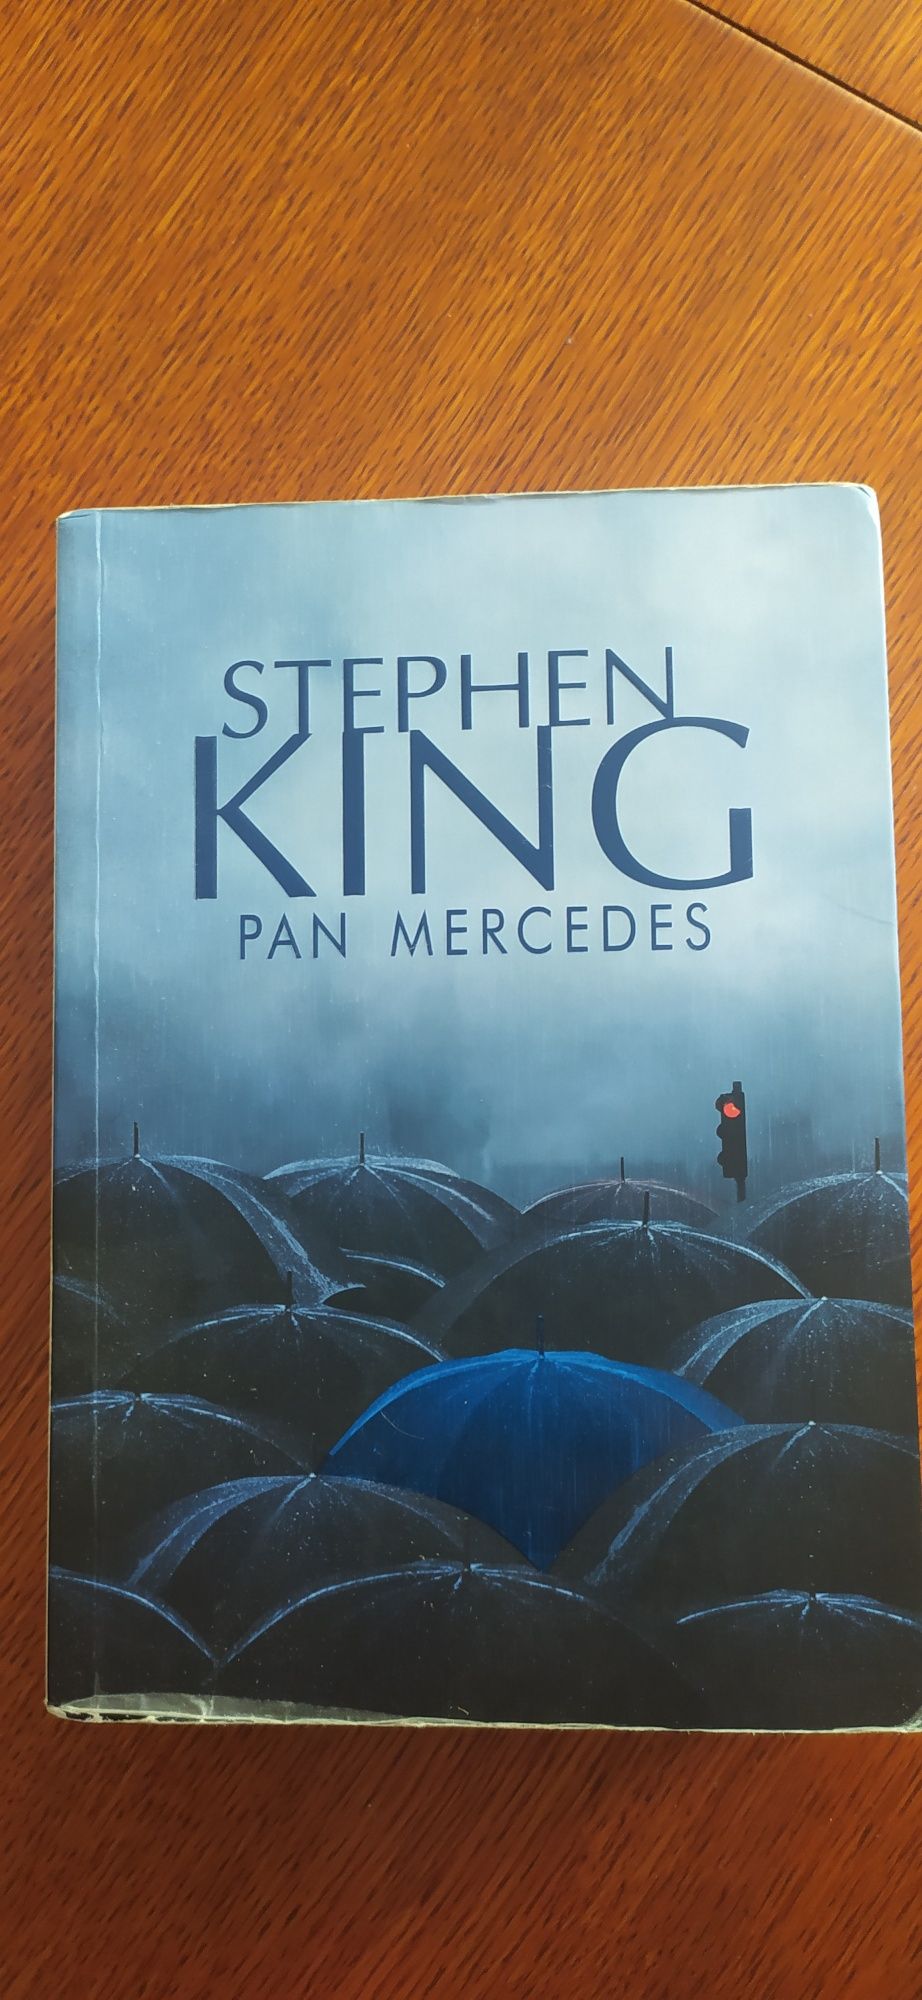 Stephen King "Pan Mercedes"